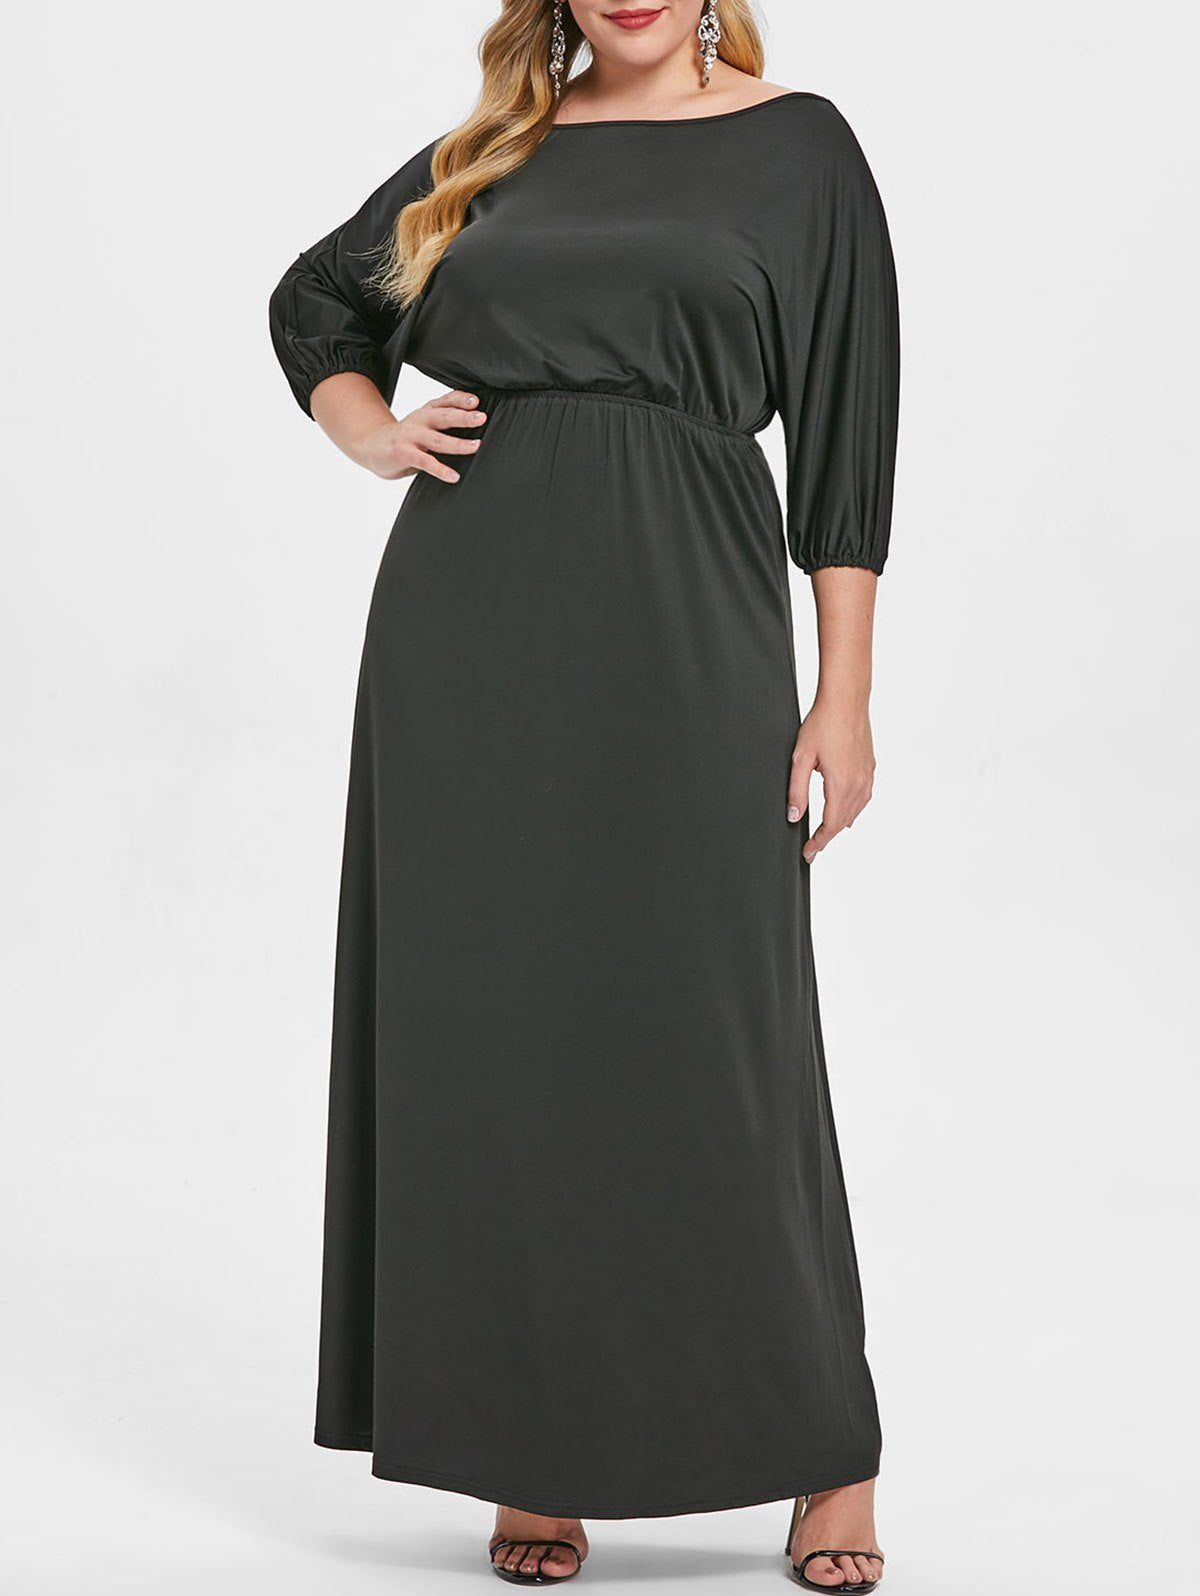 Plus Size Off The Shoulder Short Sleeve Maxi Dress | bestdress1.com